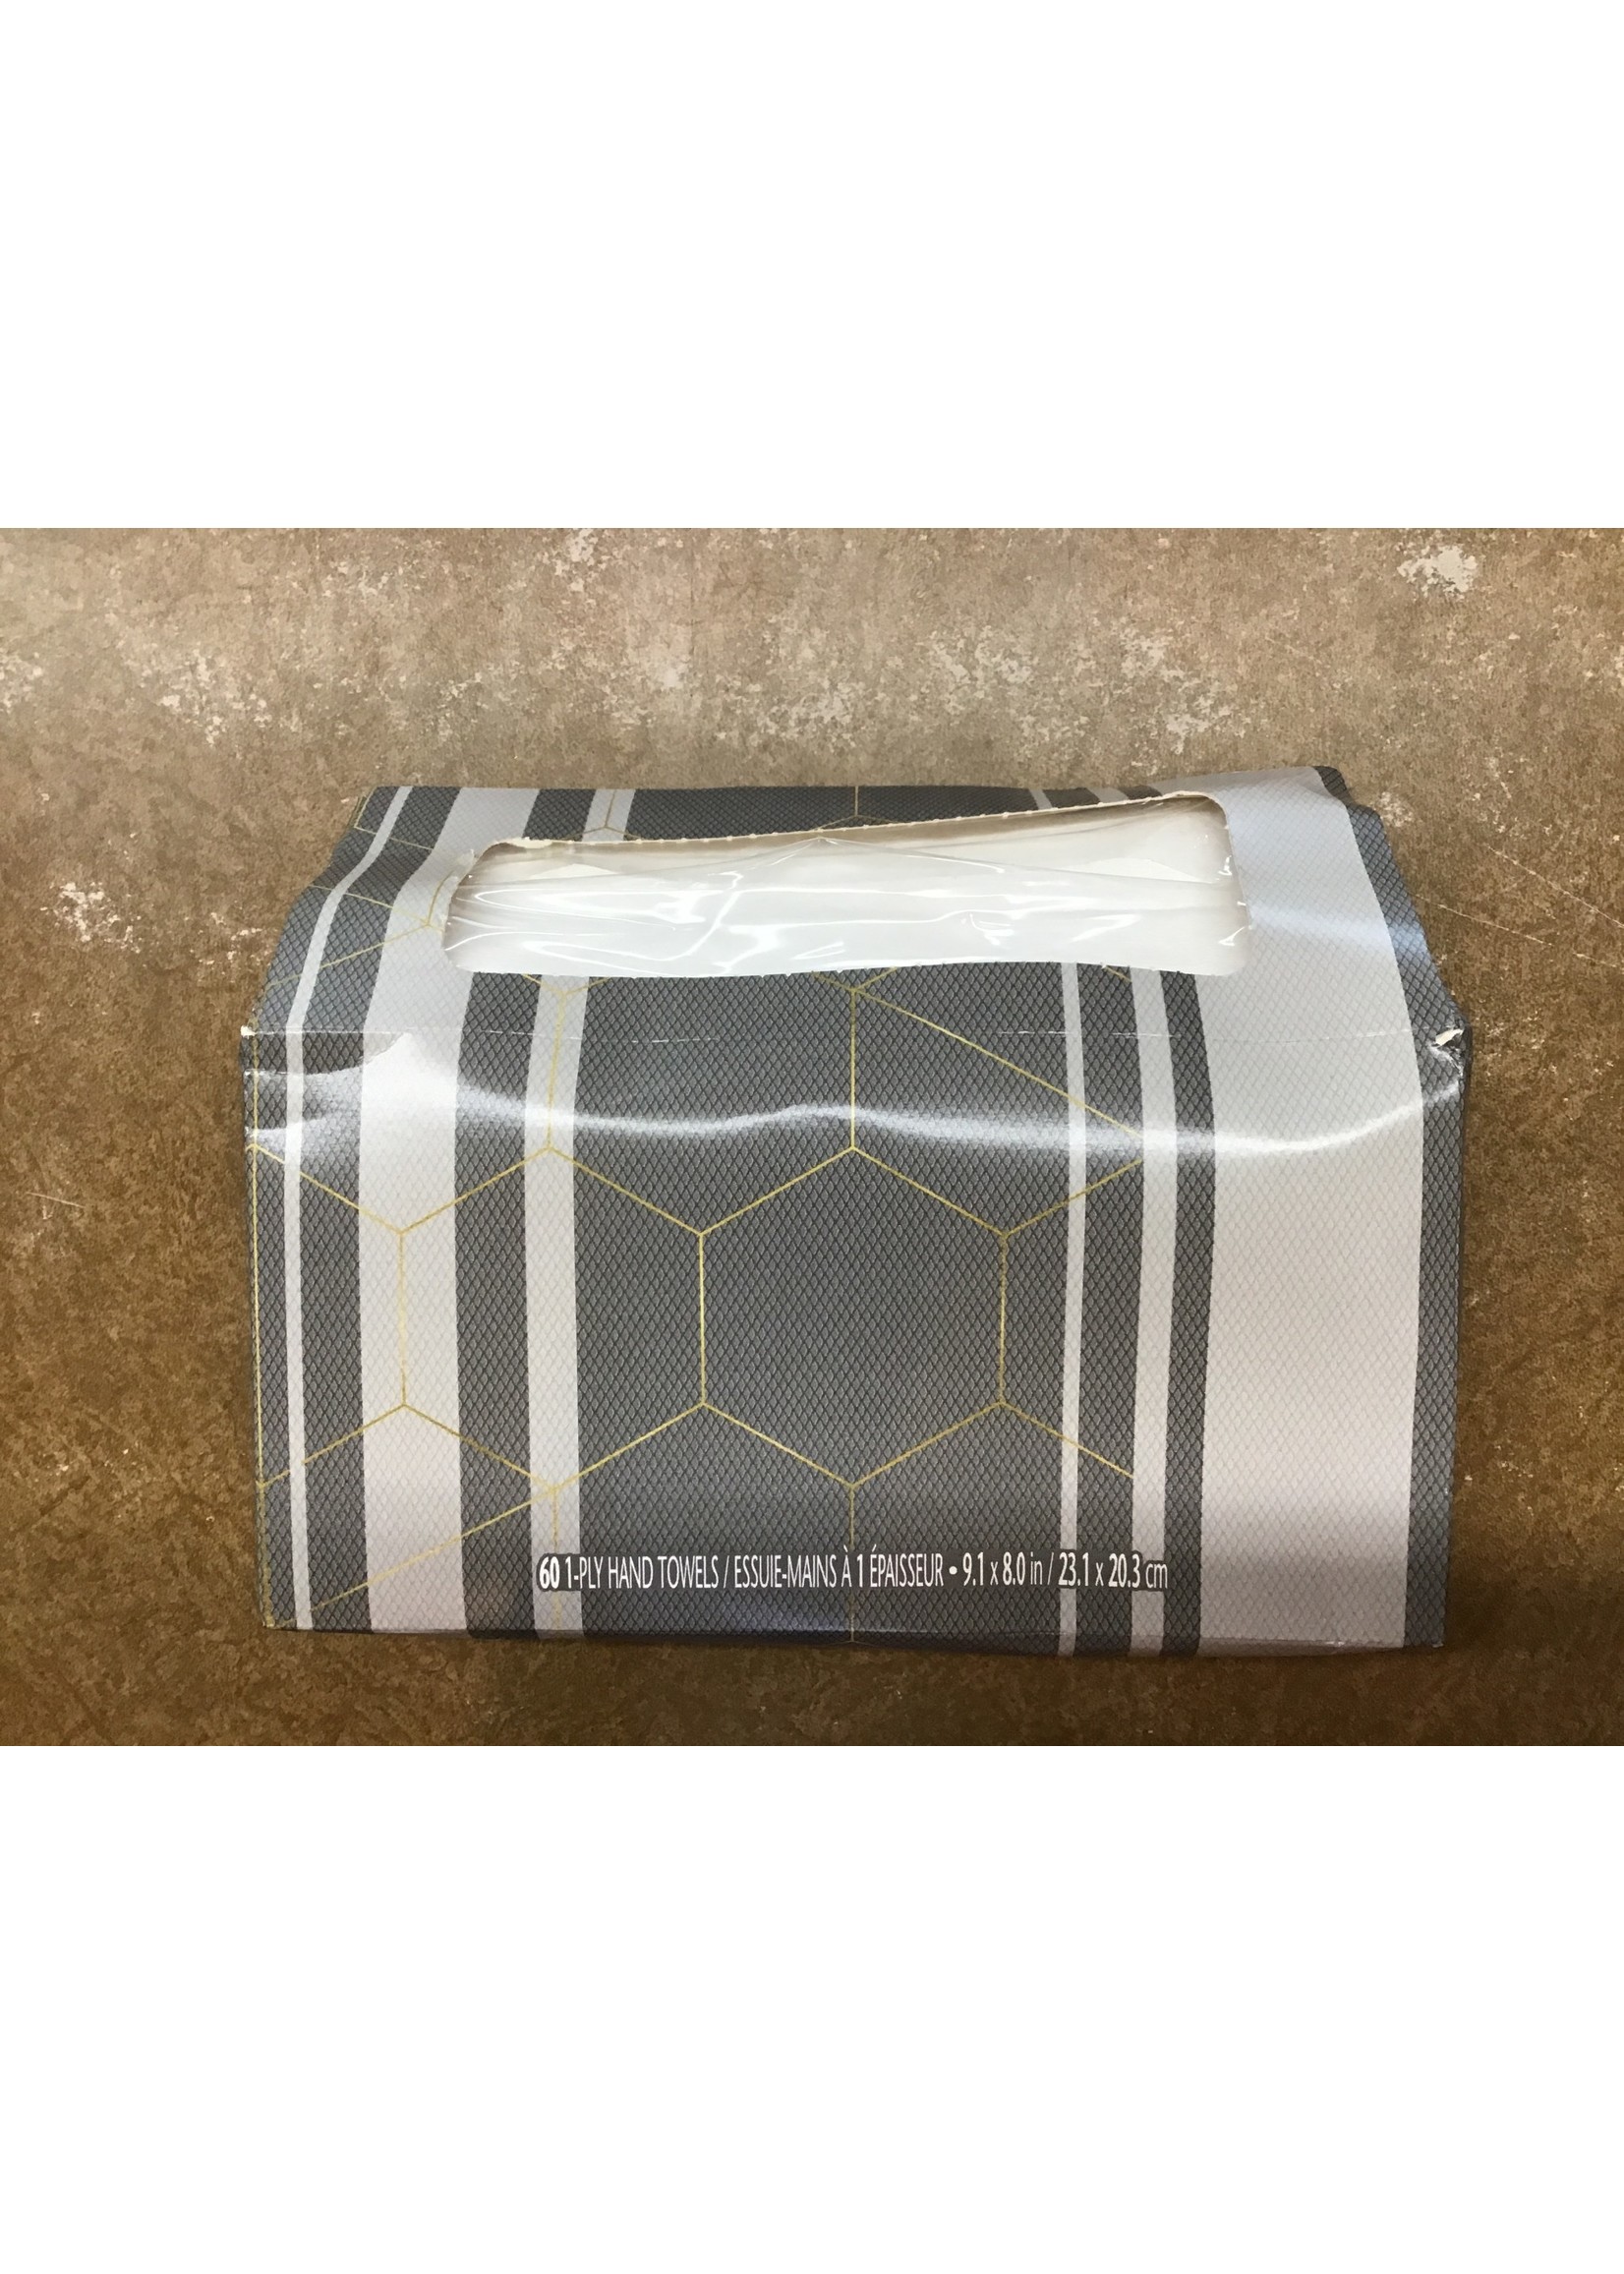 Opened- Kleenex Single Sheet White Hand Paper Towels - 60ct